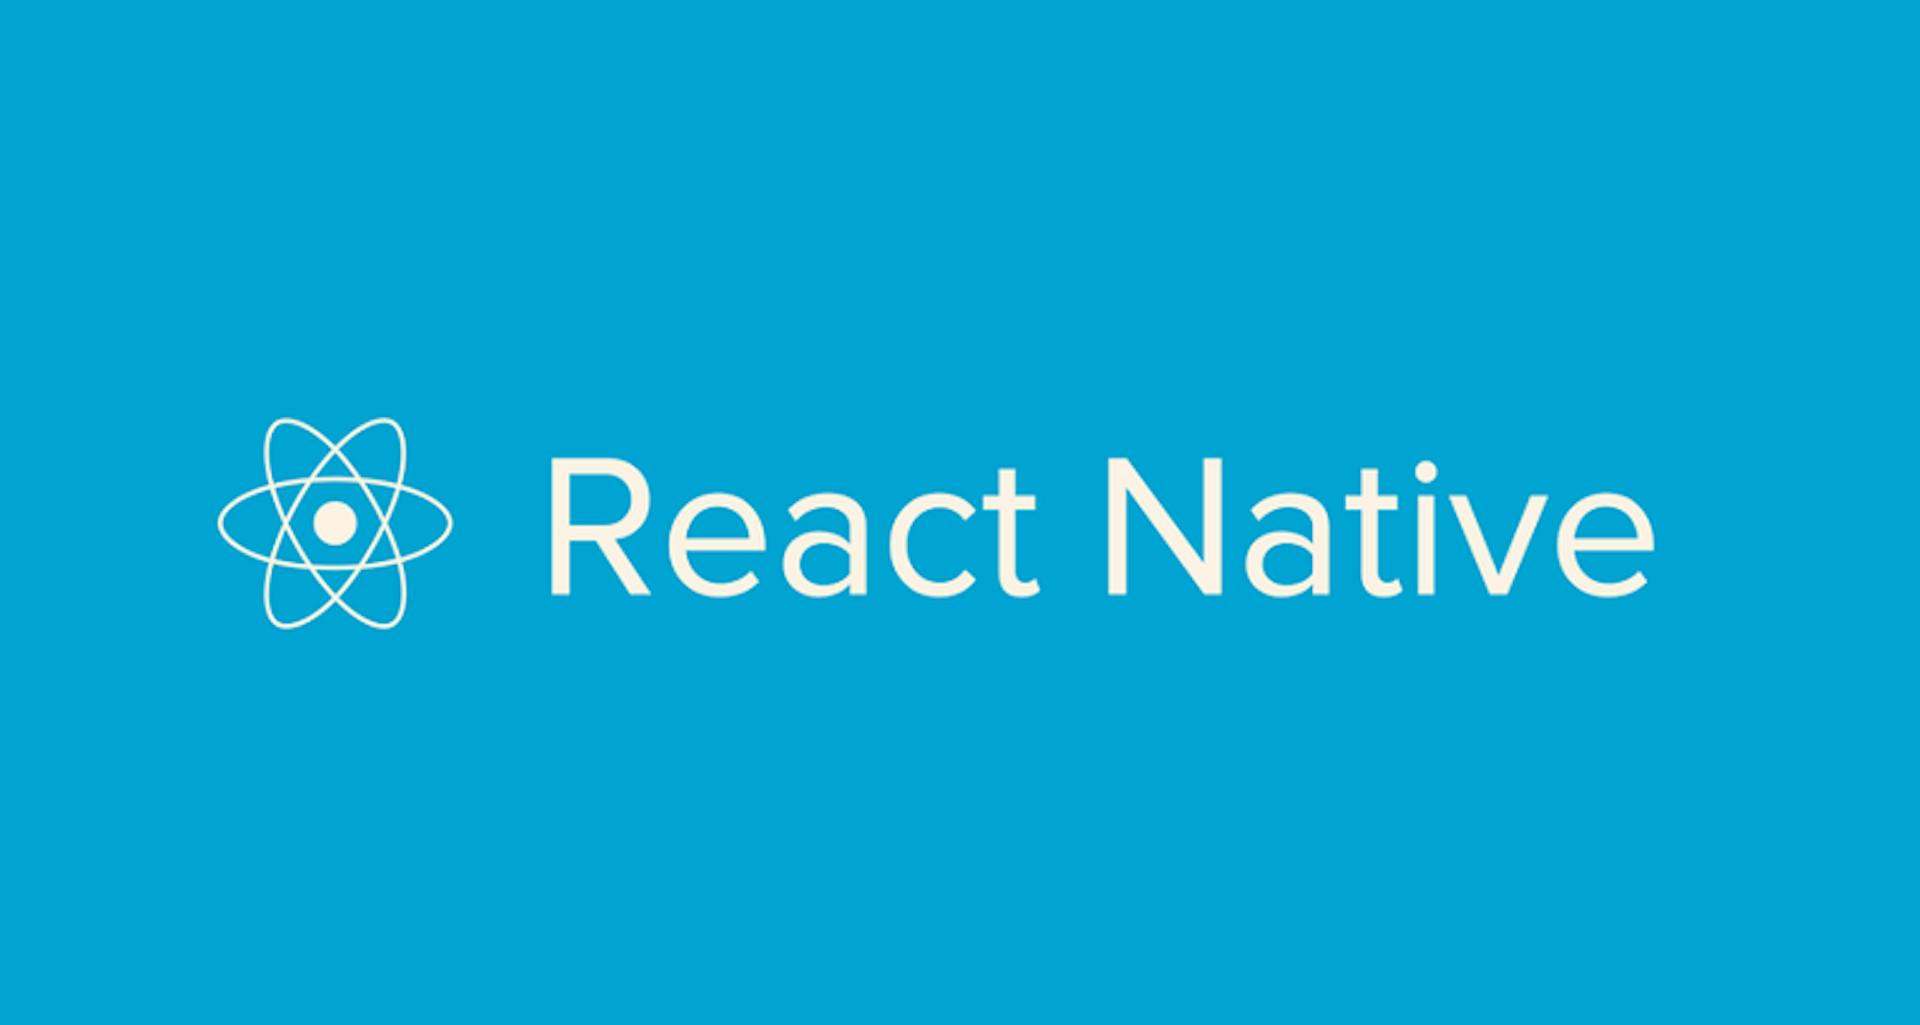 featured image - Understanding the React Native bridge concept